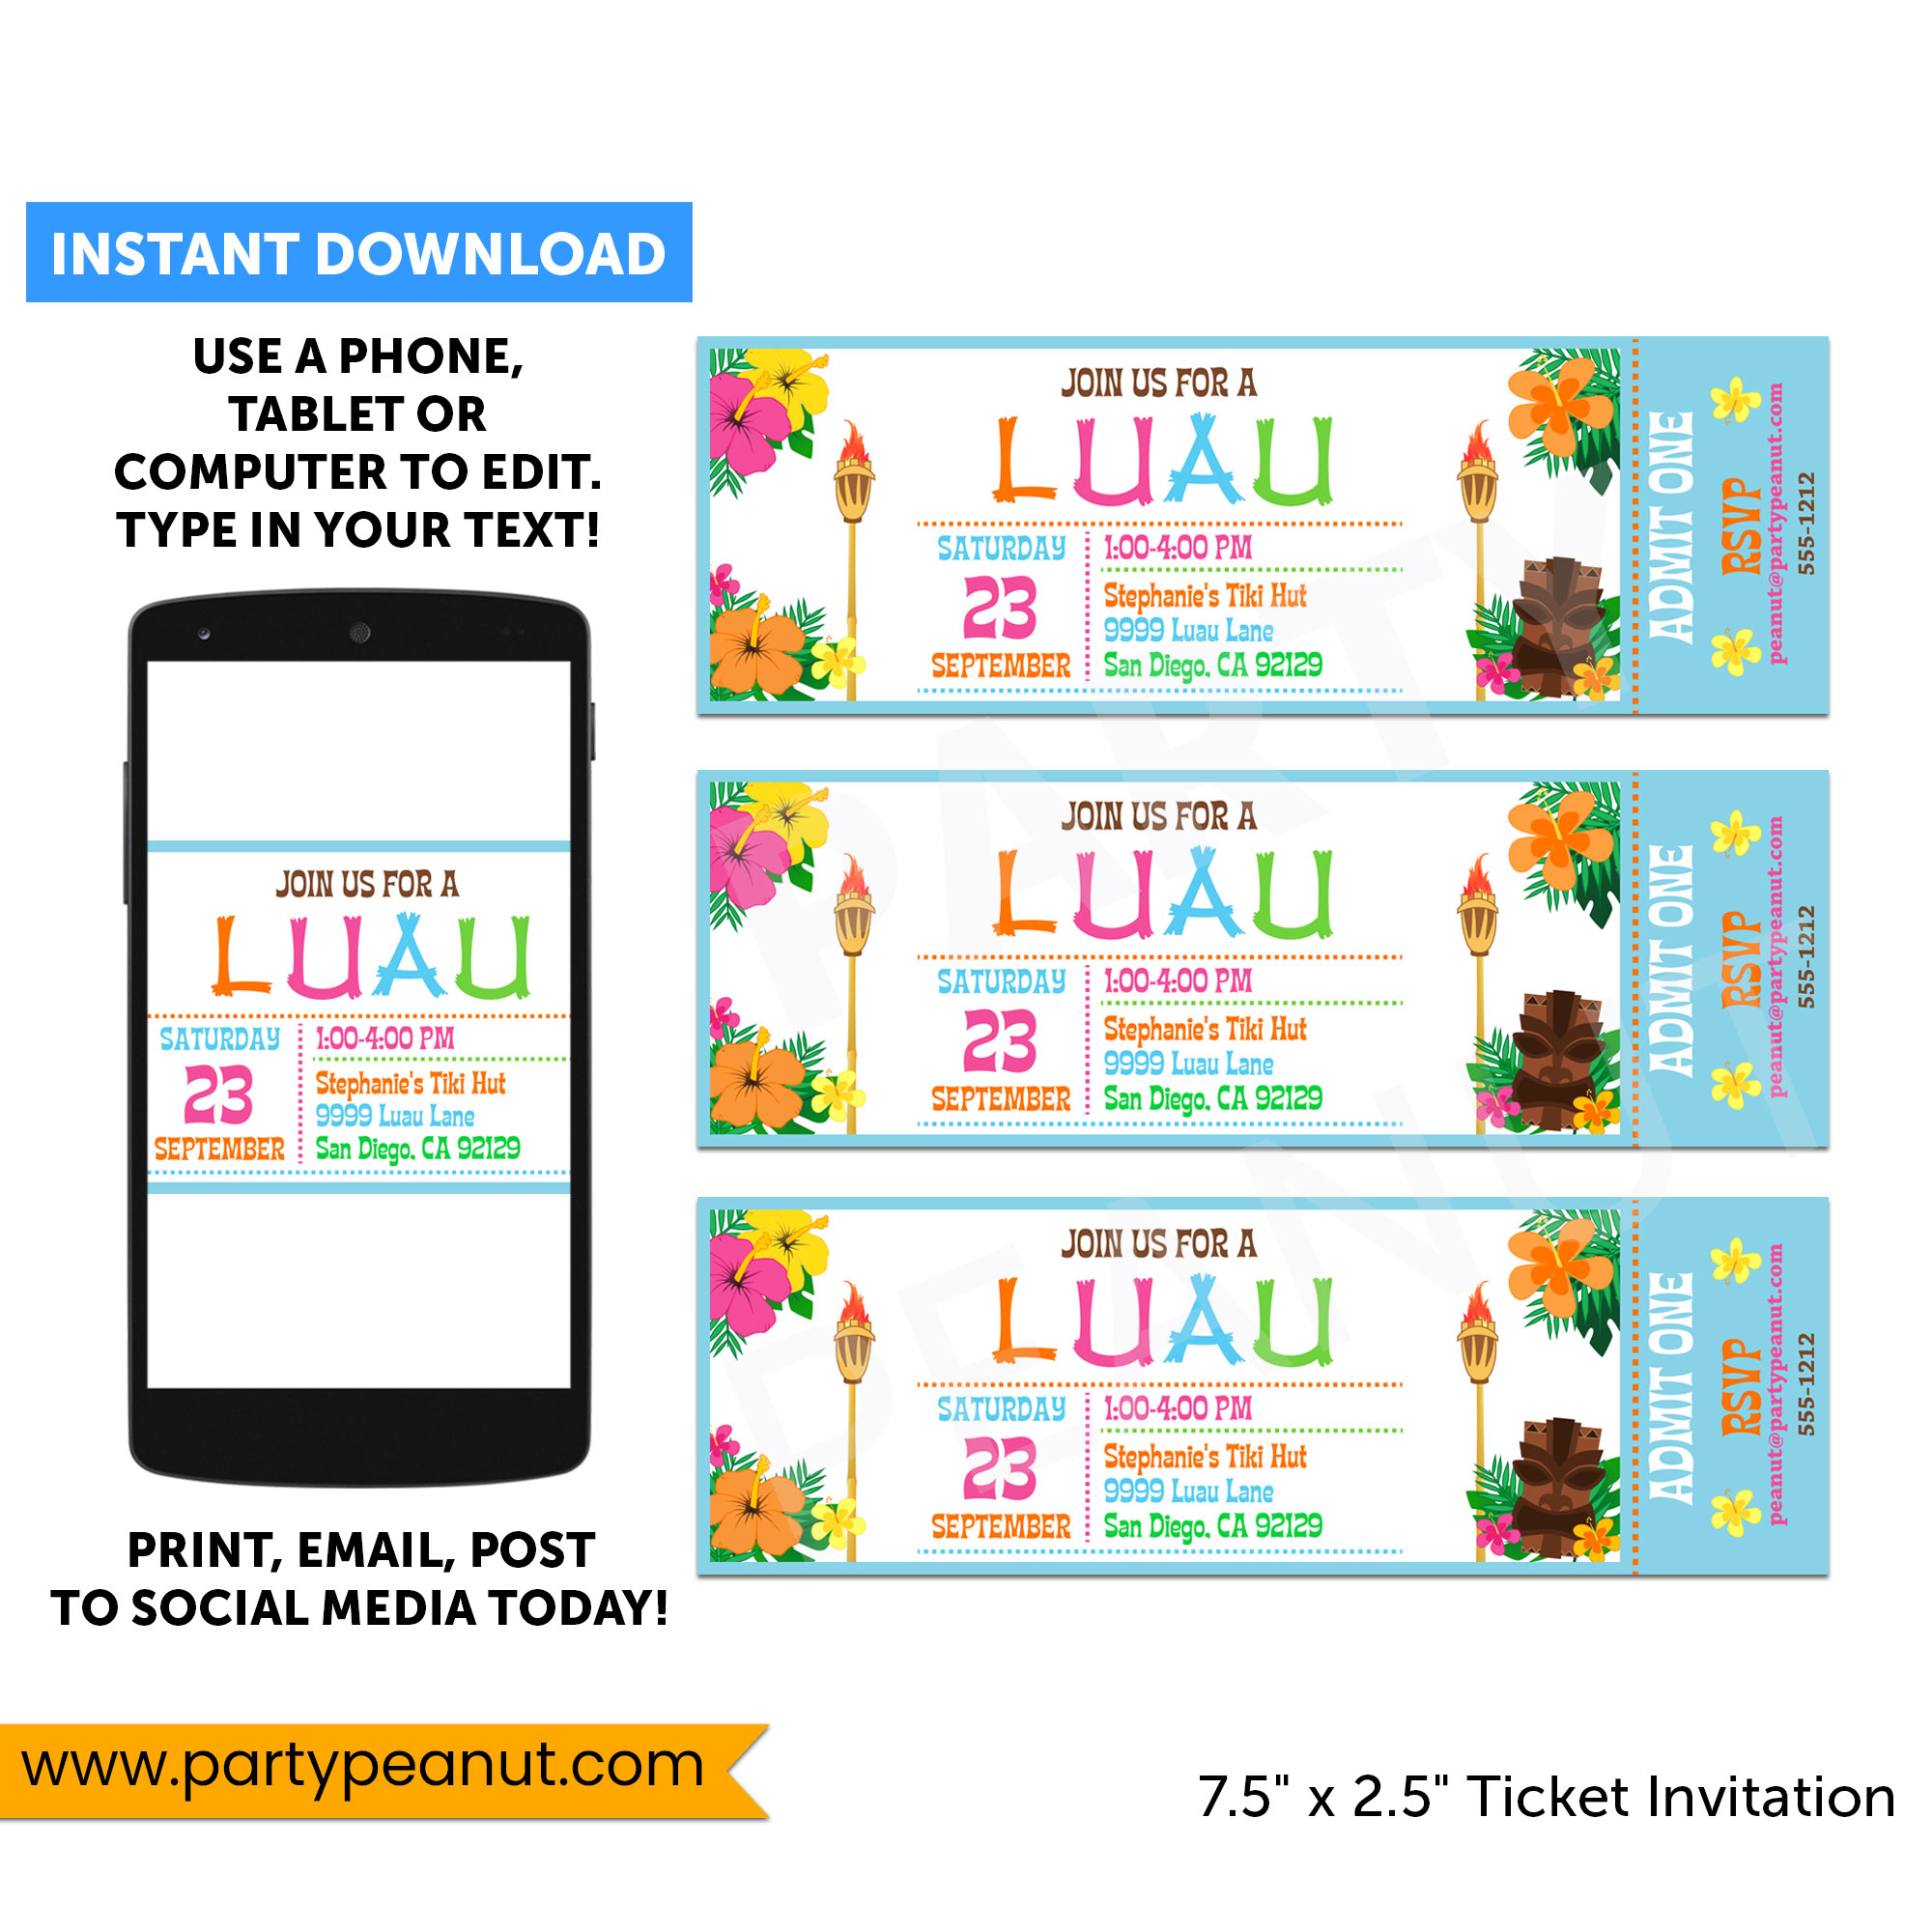 Luau Ticket Invitation Party Printable Party Peanut